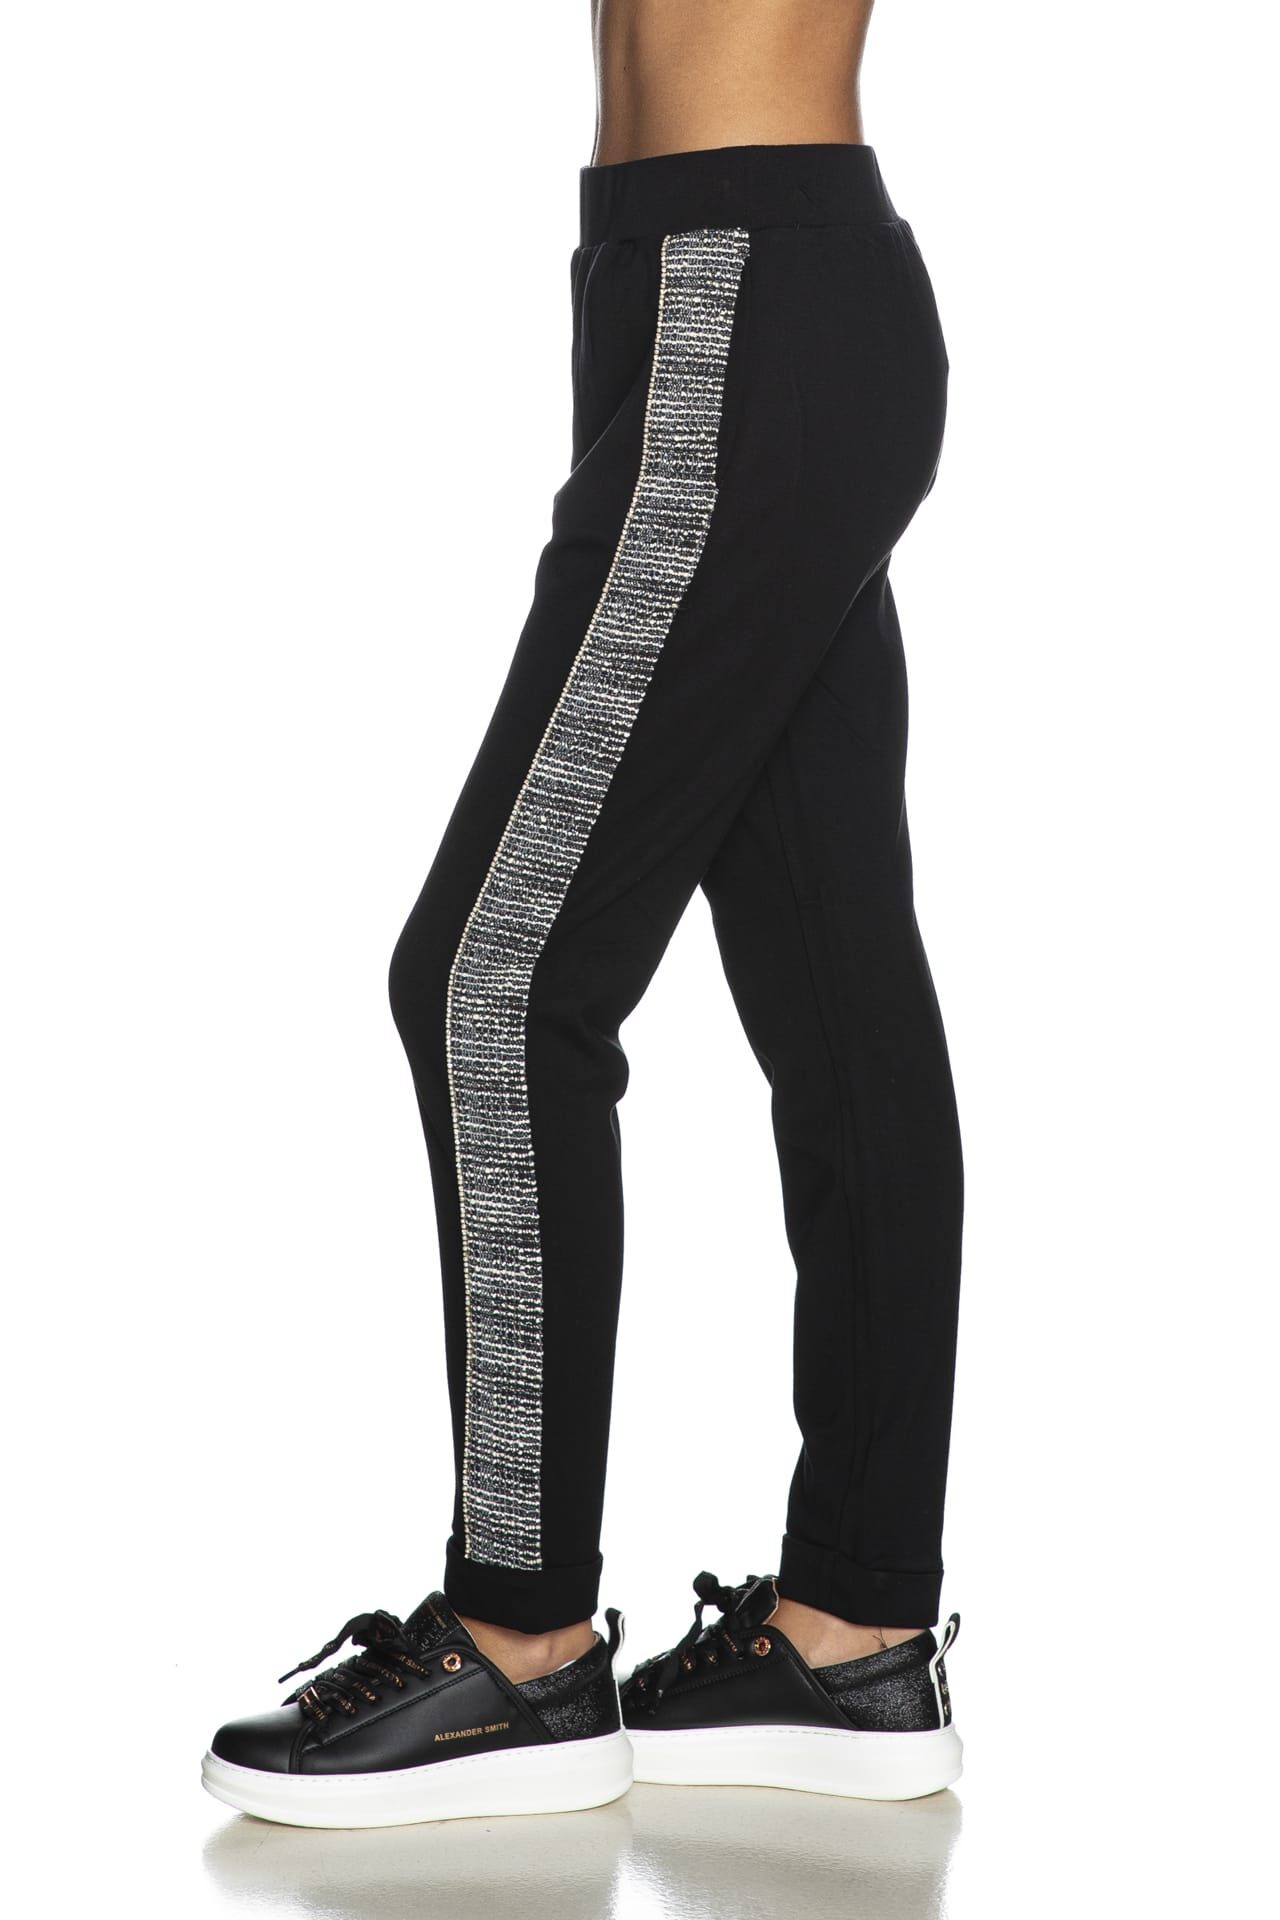 Pantalone Liu Jo Sport Jogger da donna nero tweed bianco nero lurex silver